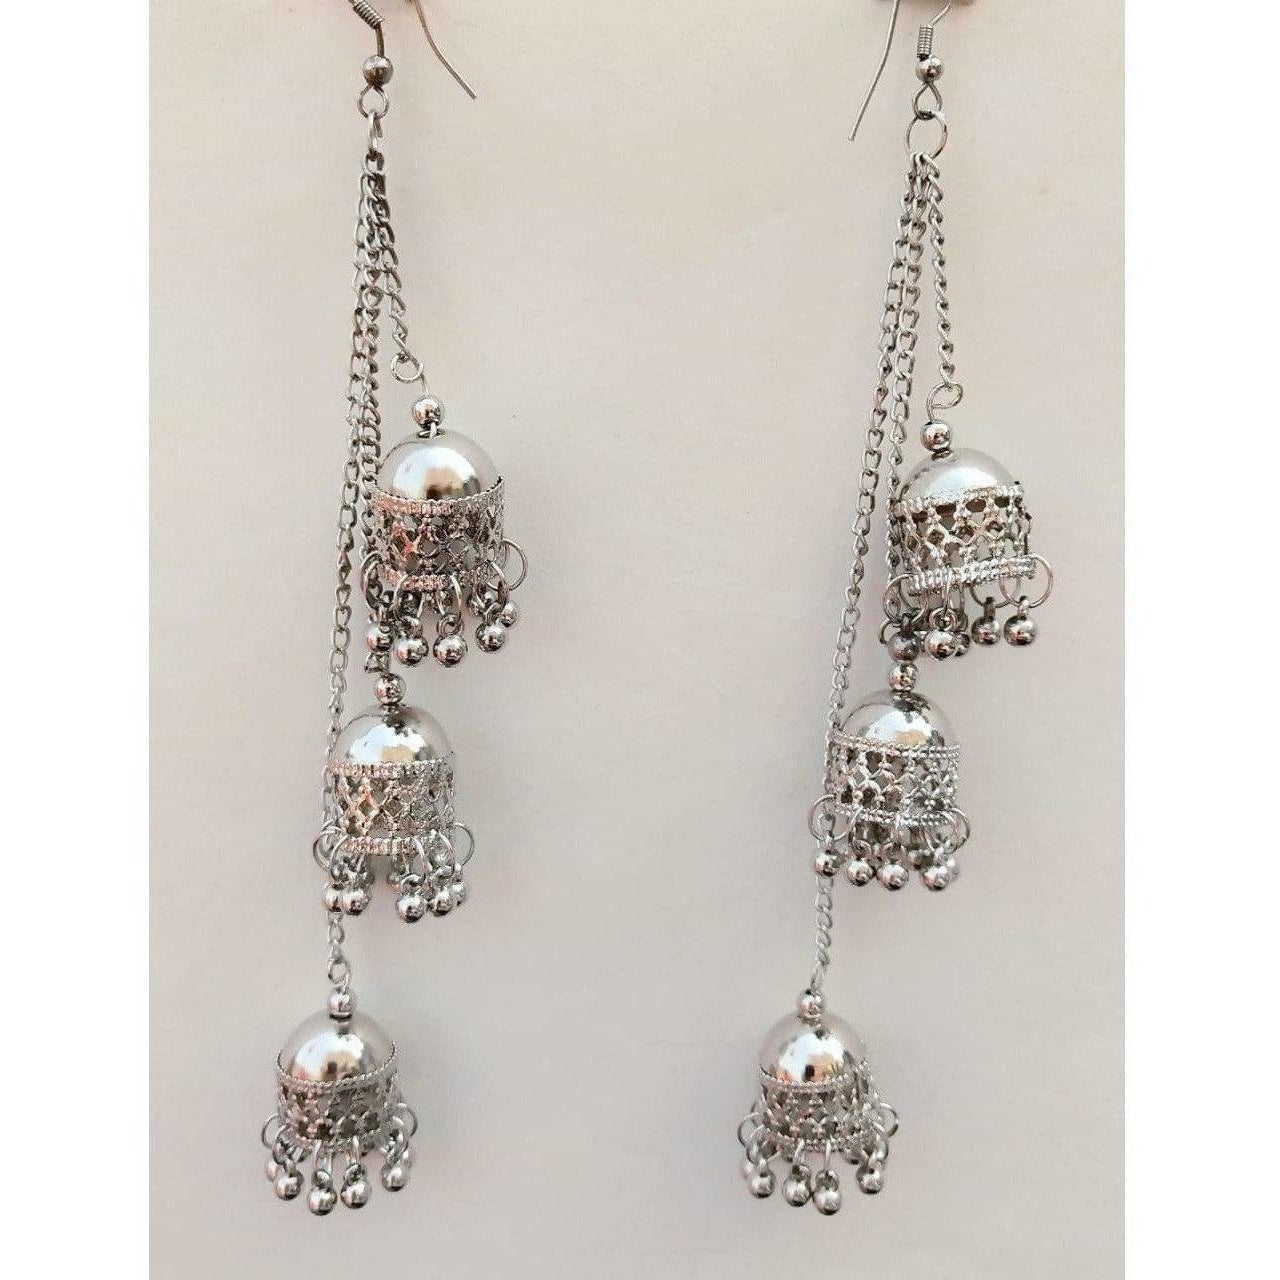 Silver Oxidized Kashmiri Hanging Triple Jhumkas Chain Earrings For Parties